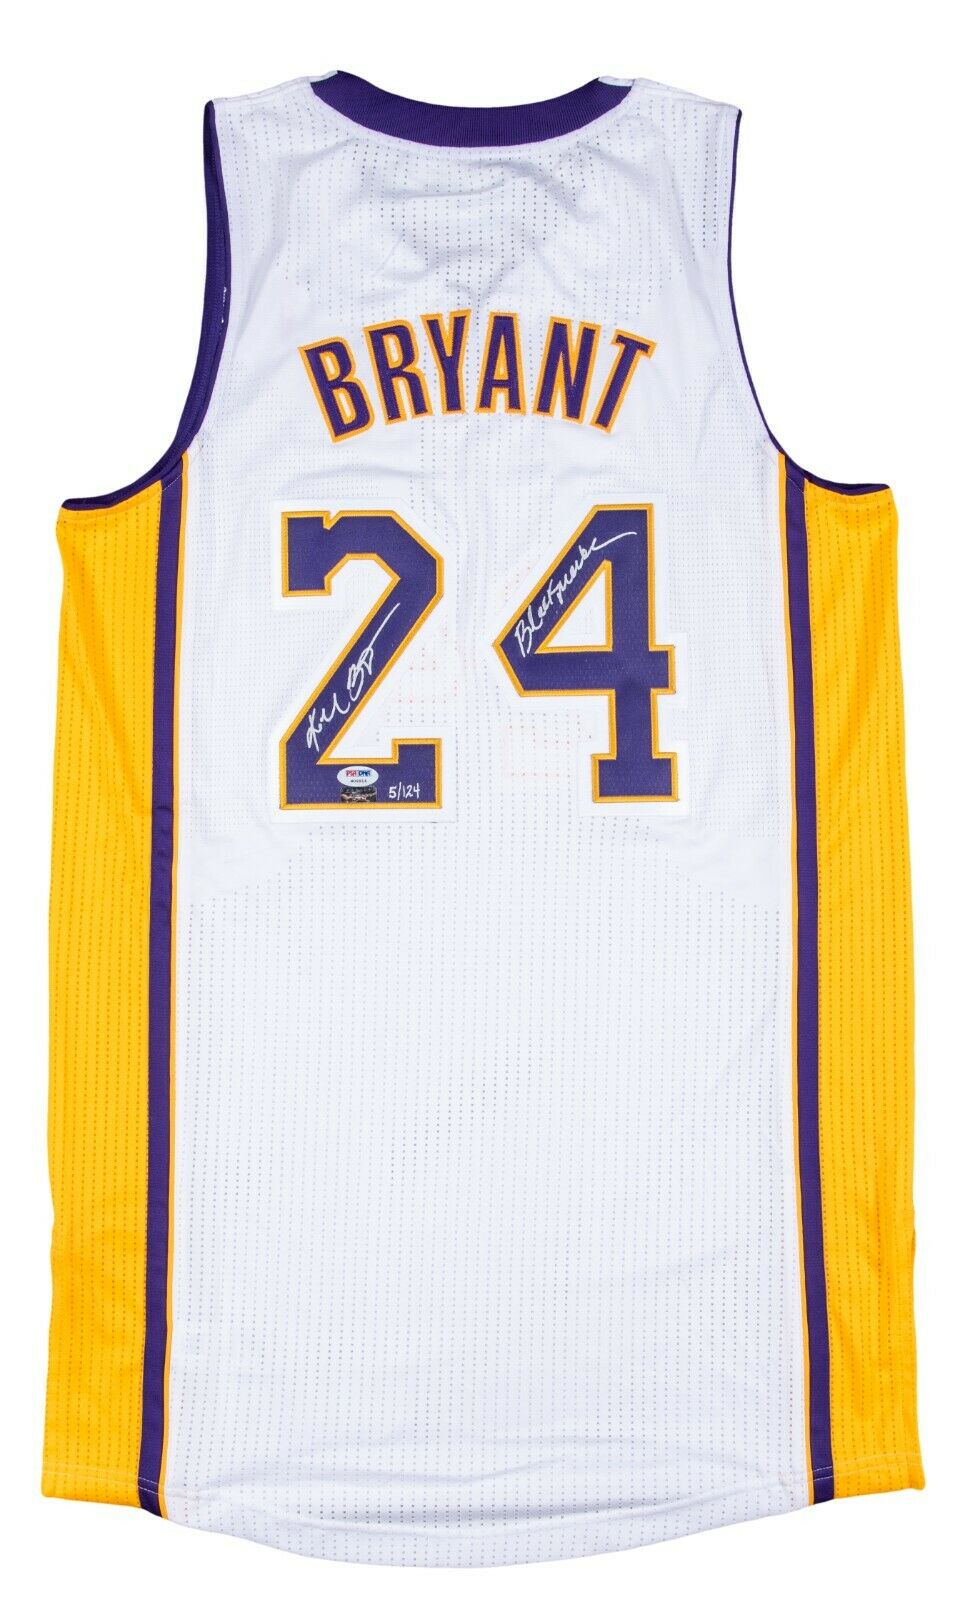 Kobe Bryant #24 Commemorative Lakers Jersey Black Mamba - Rare